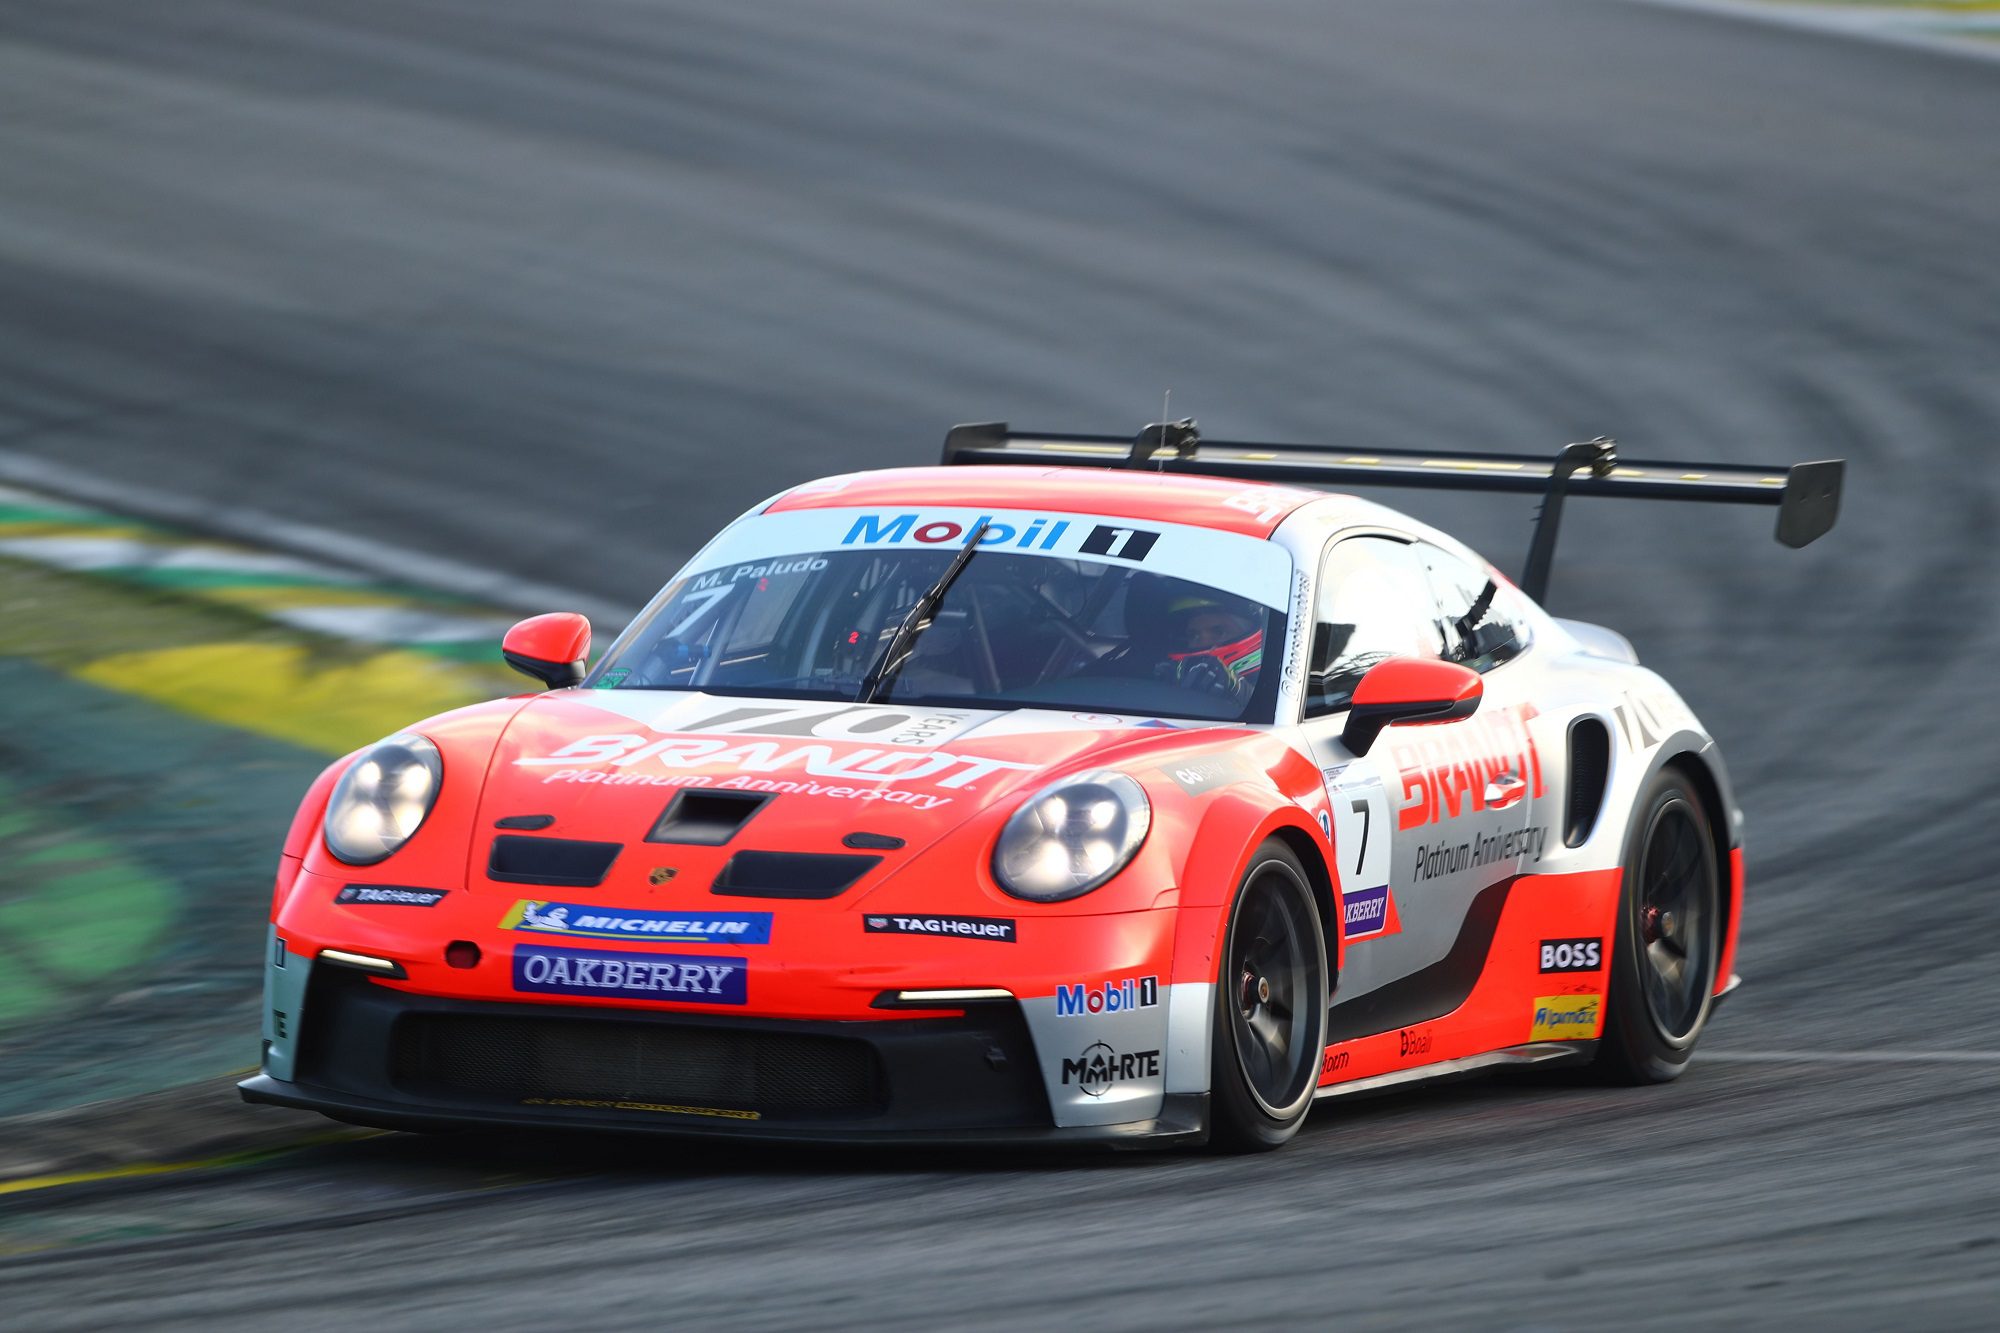 Paludo destaca baixas temperaturas e diz que expectativa para Porsche é positiva: “Gosto muito de Interlagos”